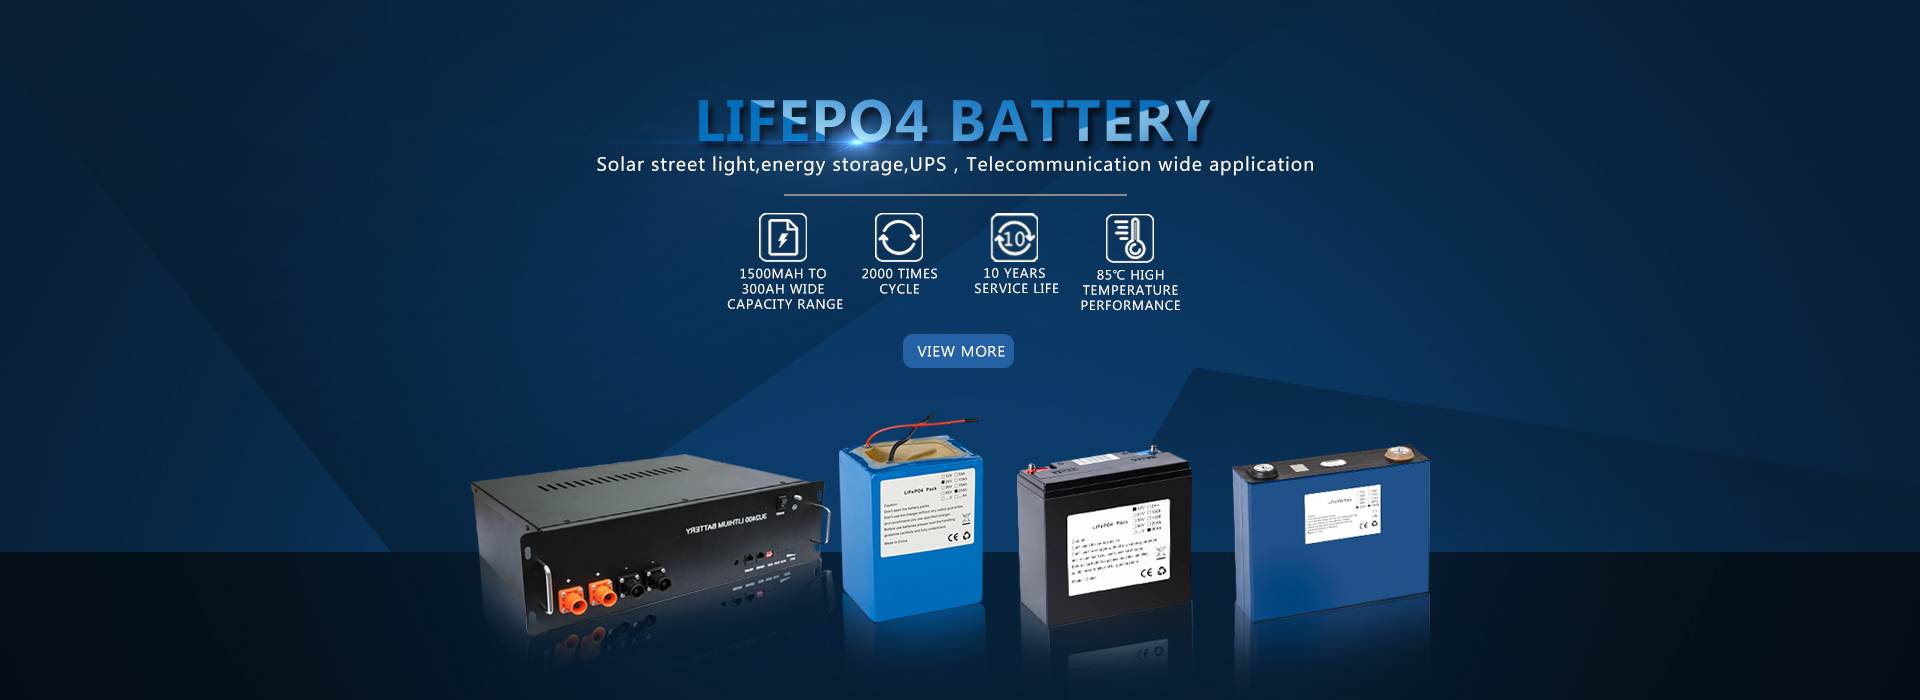 Lifepo4 Battery LifeLFPï¼‰ຜູ້ຜະລິດ